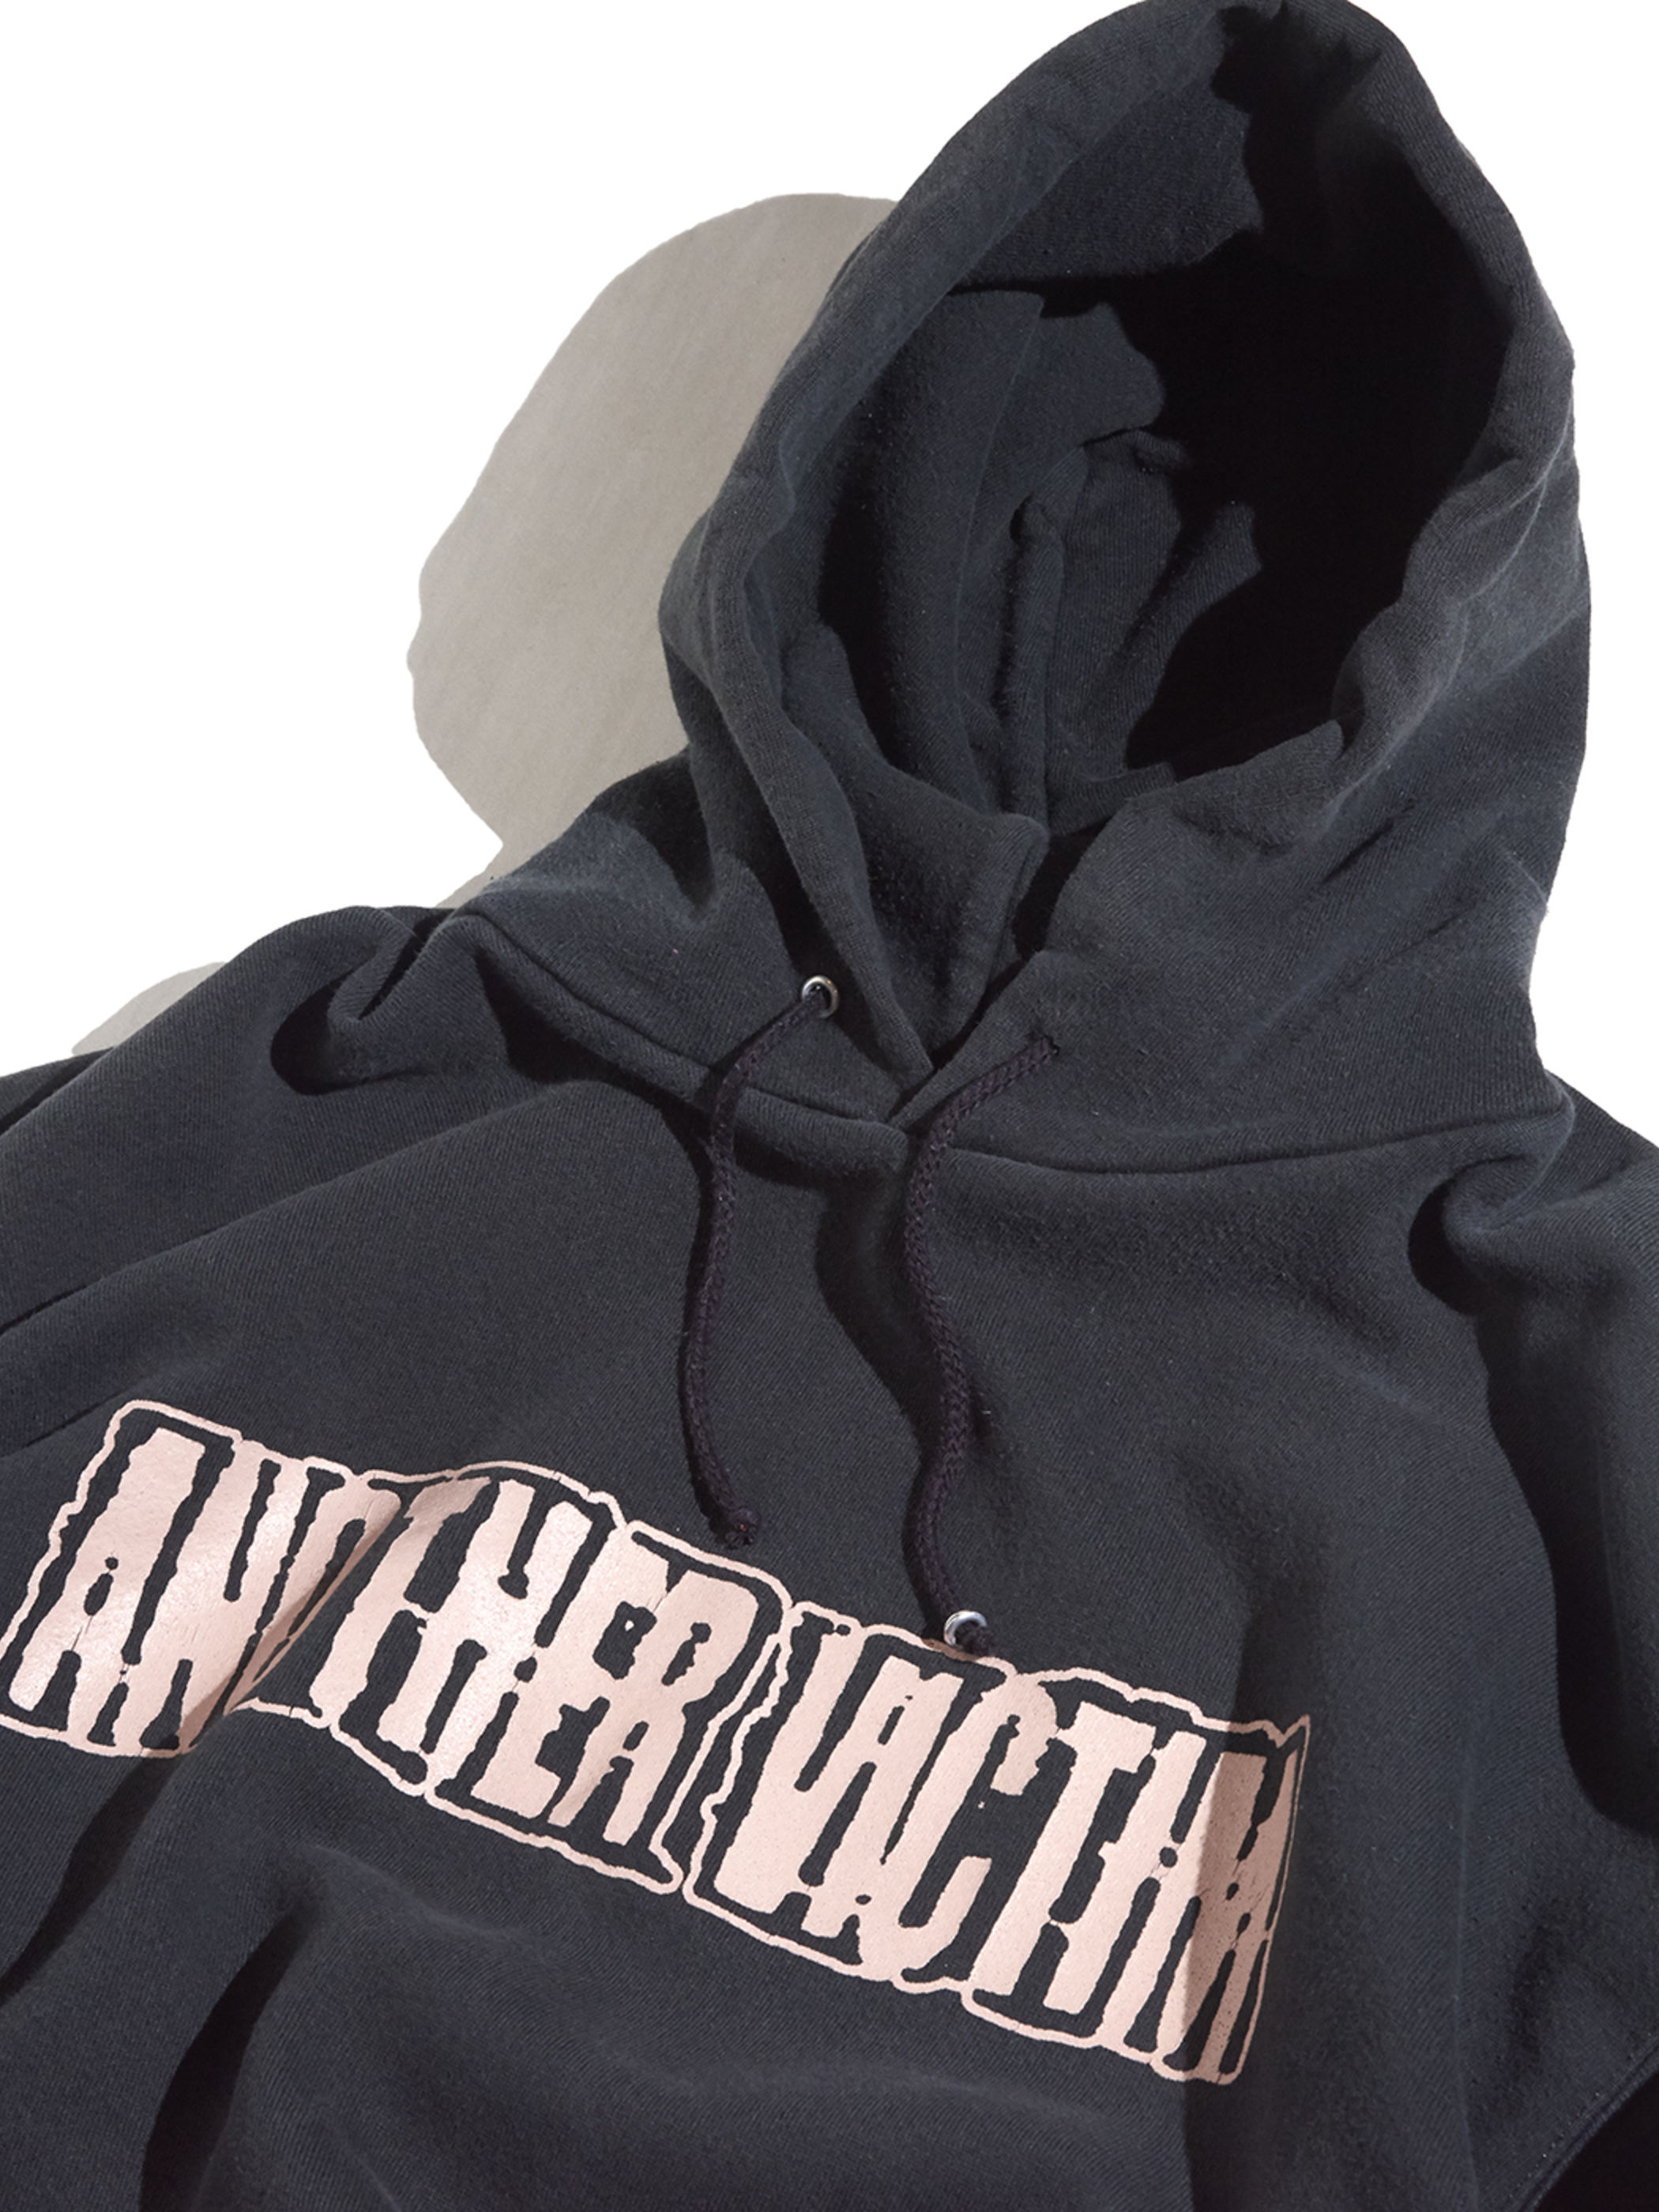 2000s "ANOTHER VICTIM" sweat hoodie -BLACK-